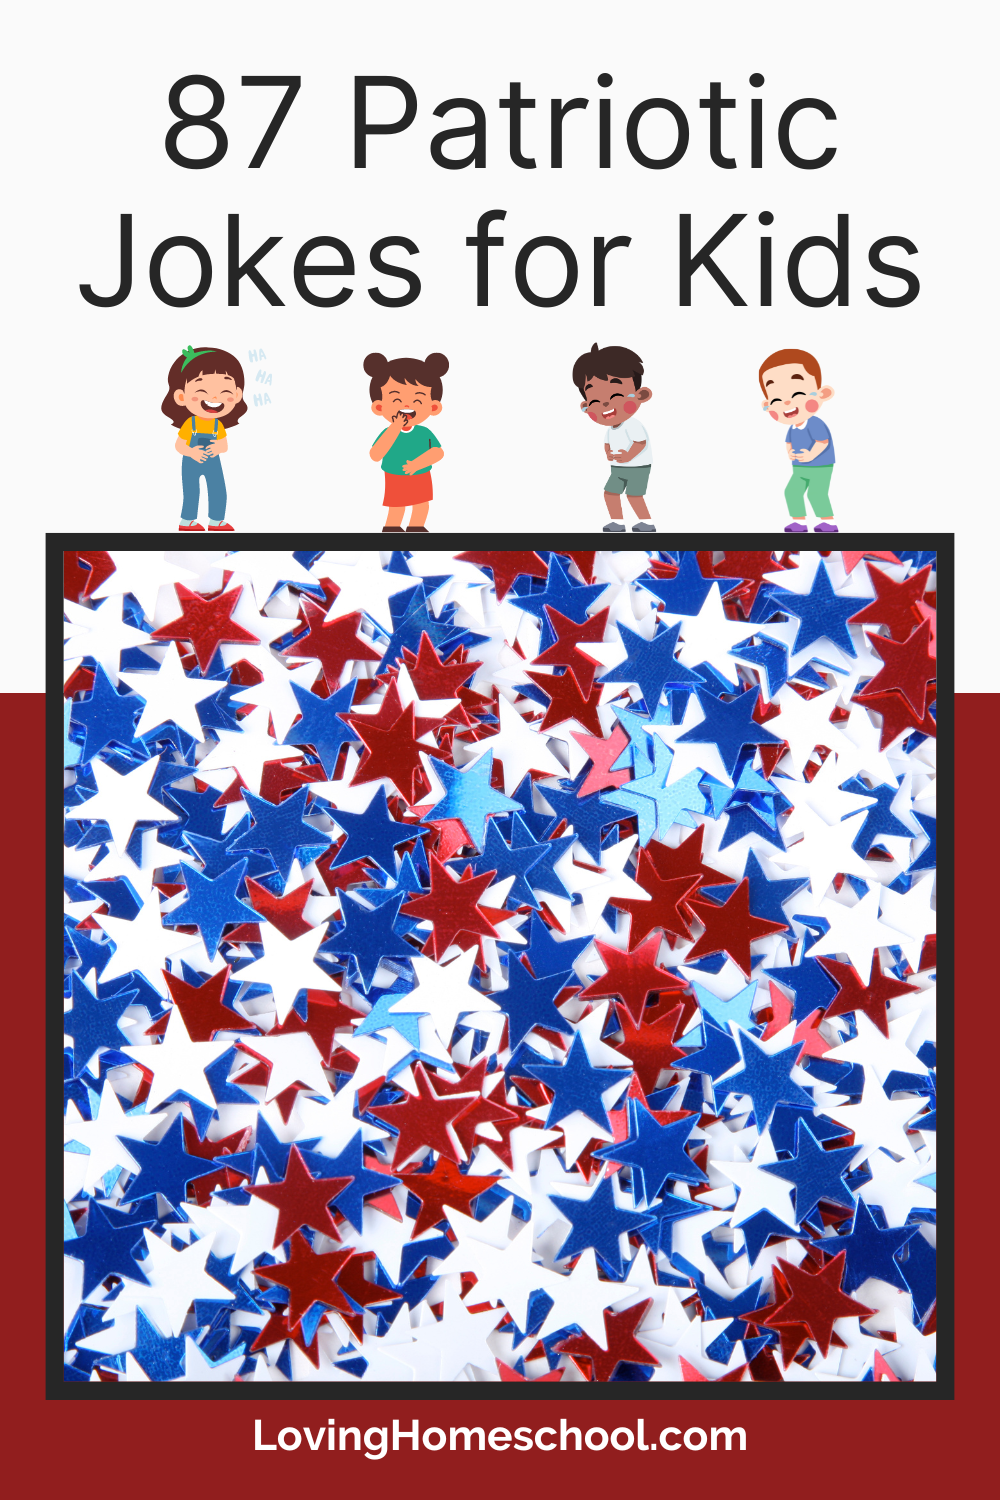 87 Patriotic Jokes for Kids Pinterest Pin